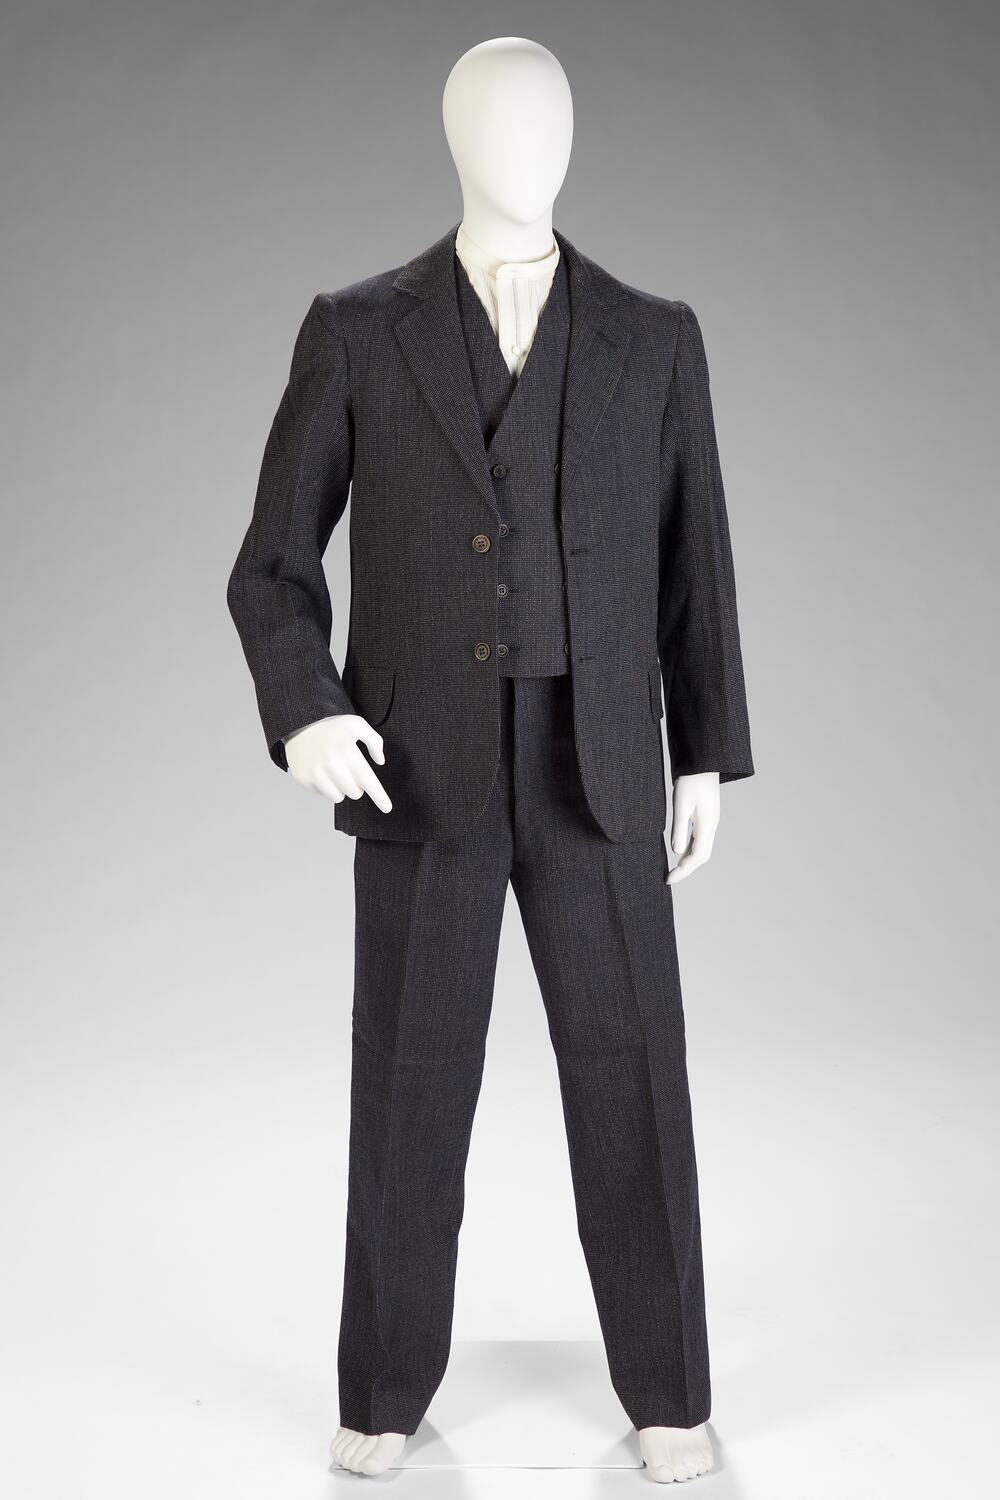 Suit - Black & White Wool, Ichizo Sato Tailor, South Yarra, circa 1910s